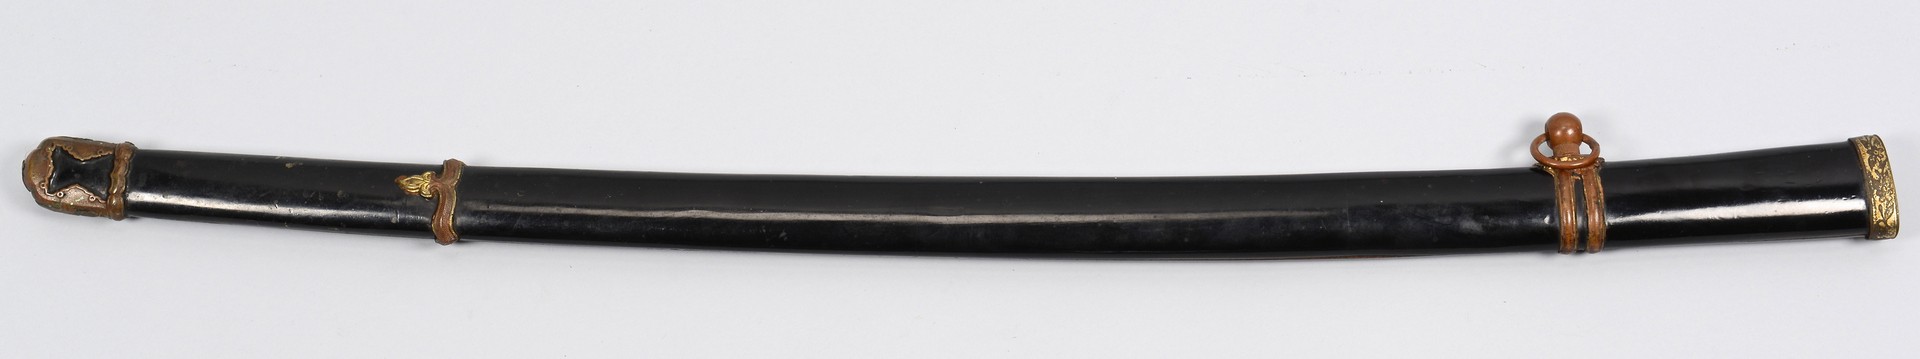 Lot 531: Japanese Katana Sword/Scabbard and Japanese Blade